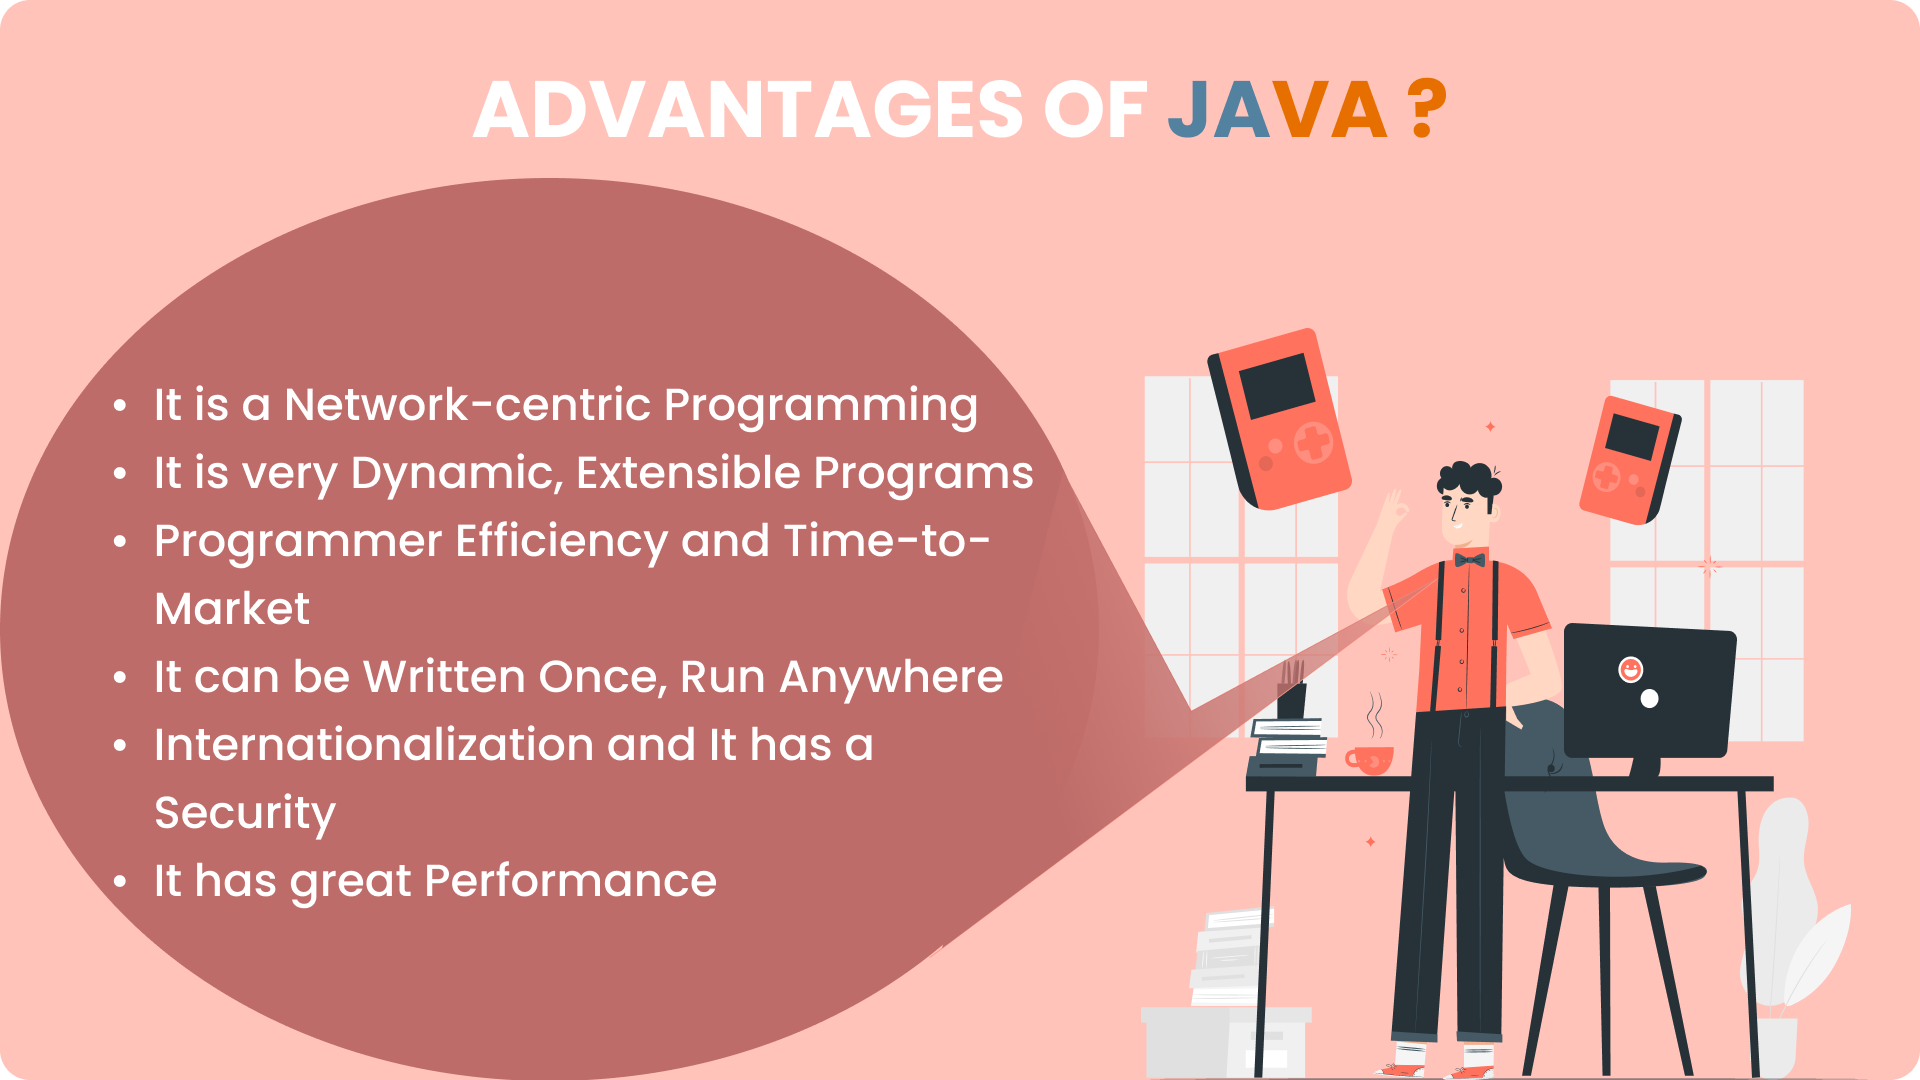 Advantages of using Java